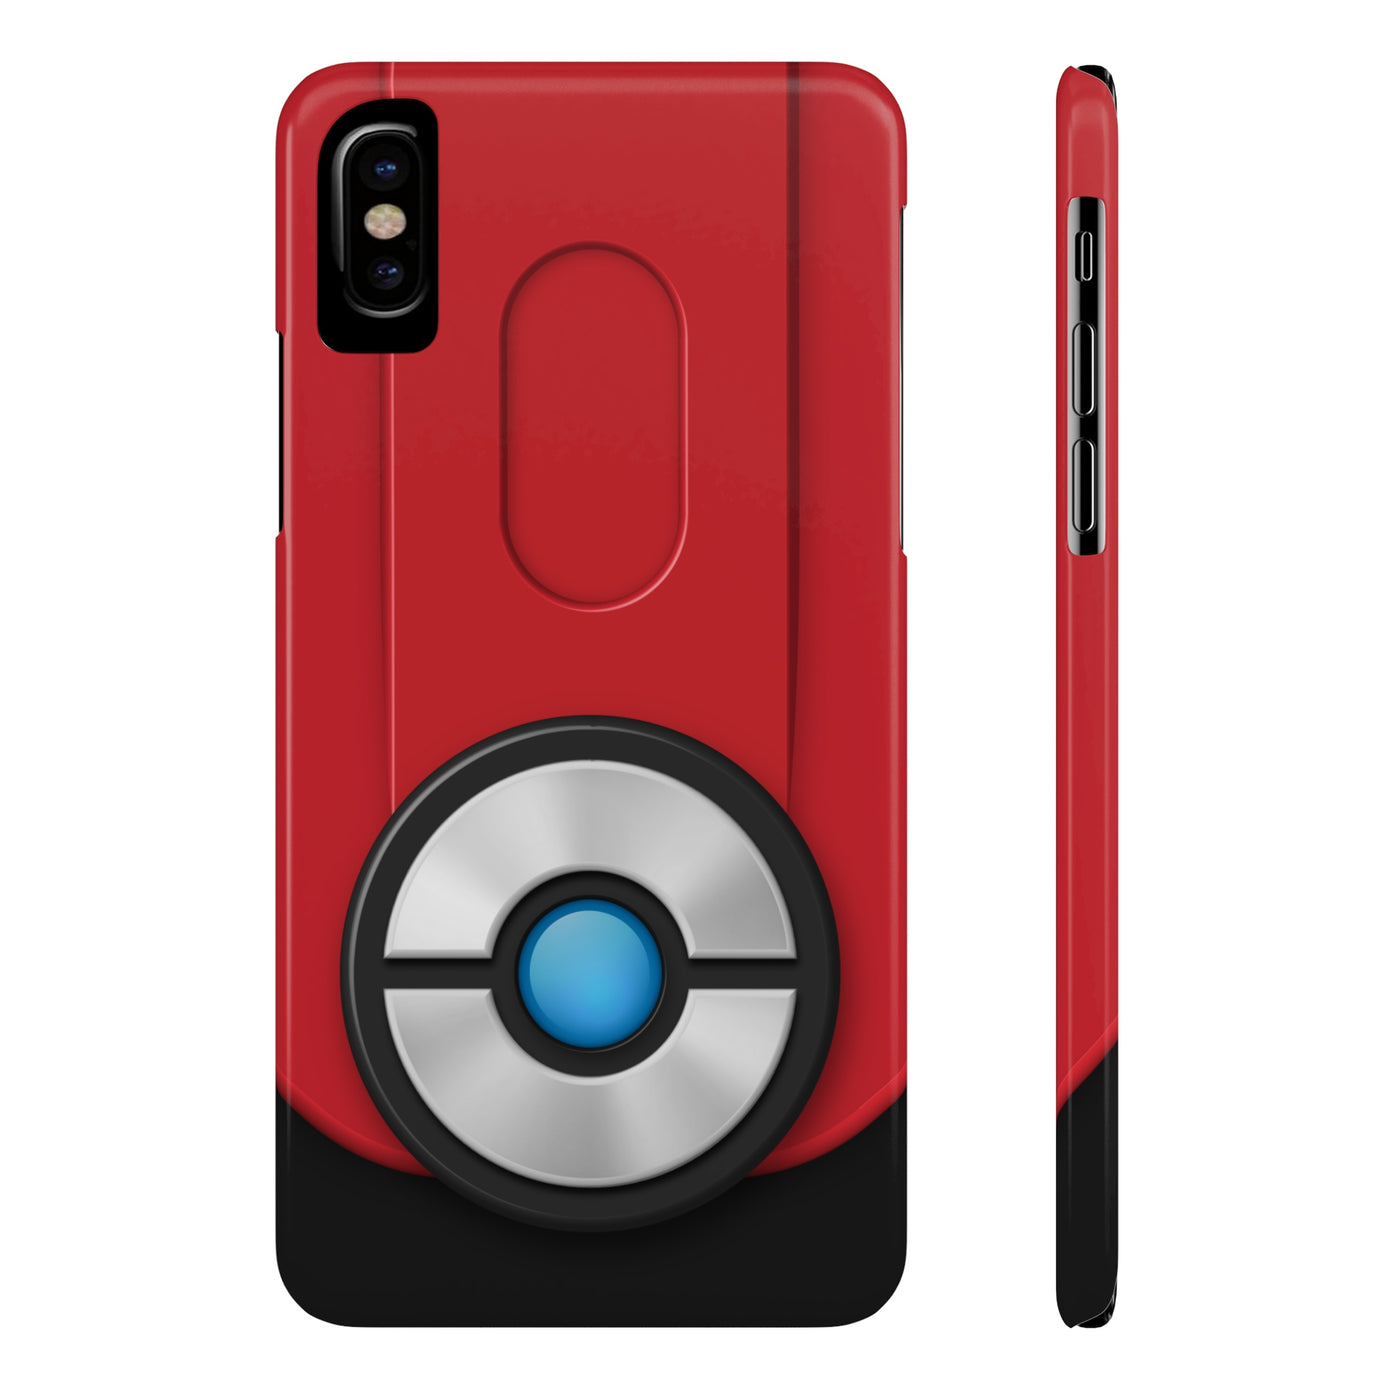 Pokedex Hoenn Pokemon iPhone XS Case